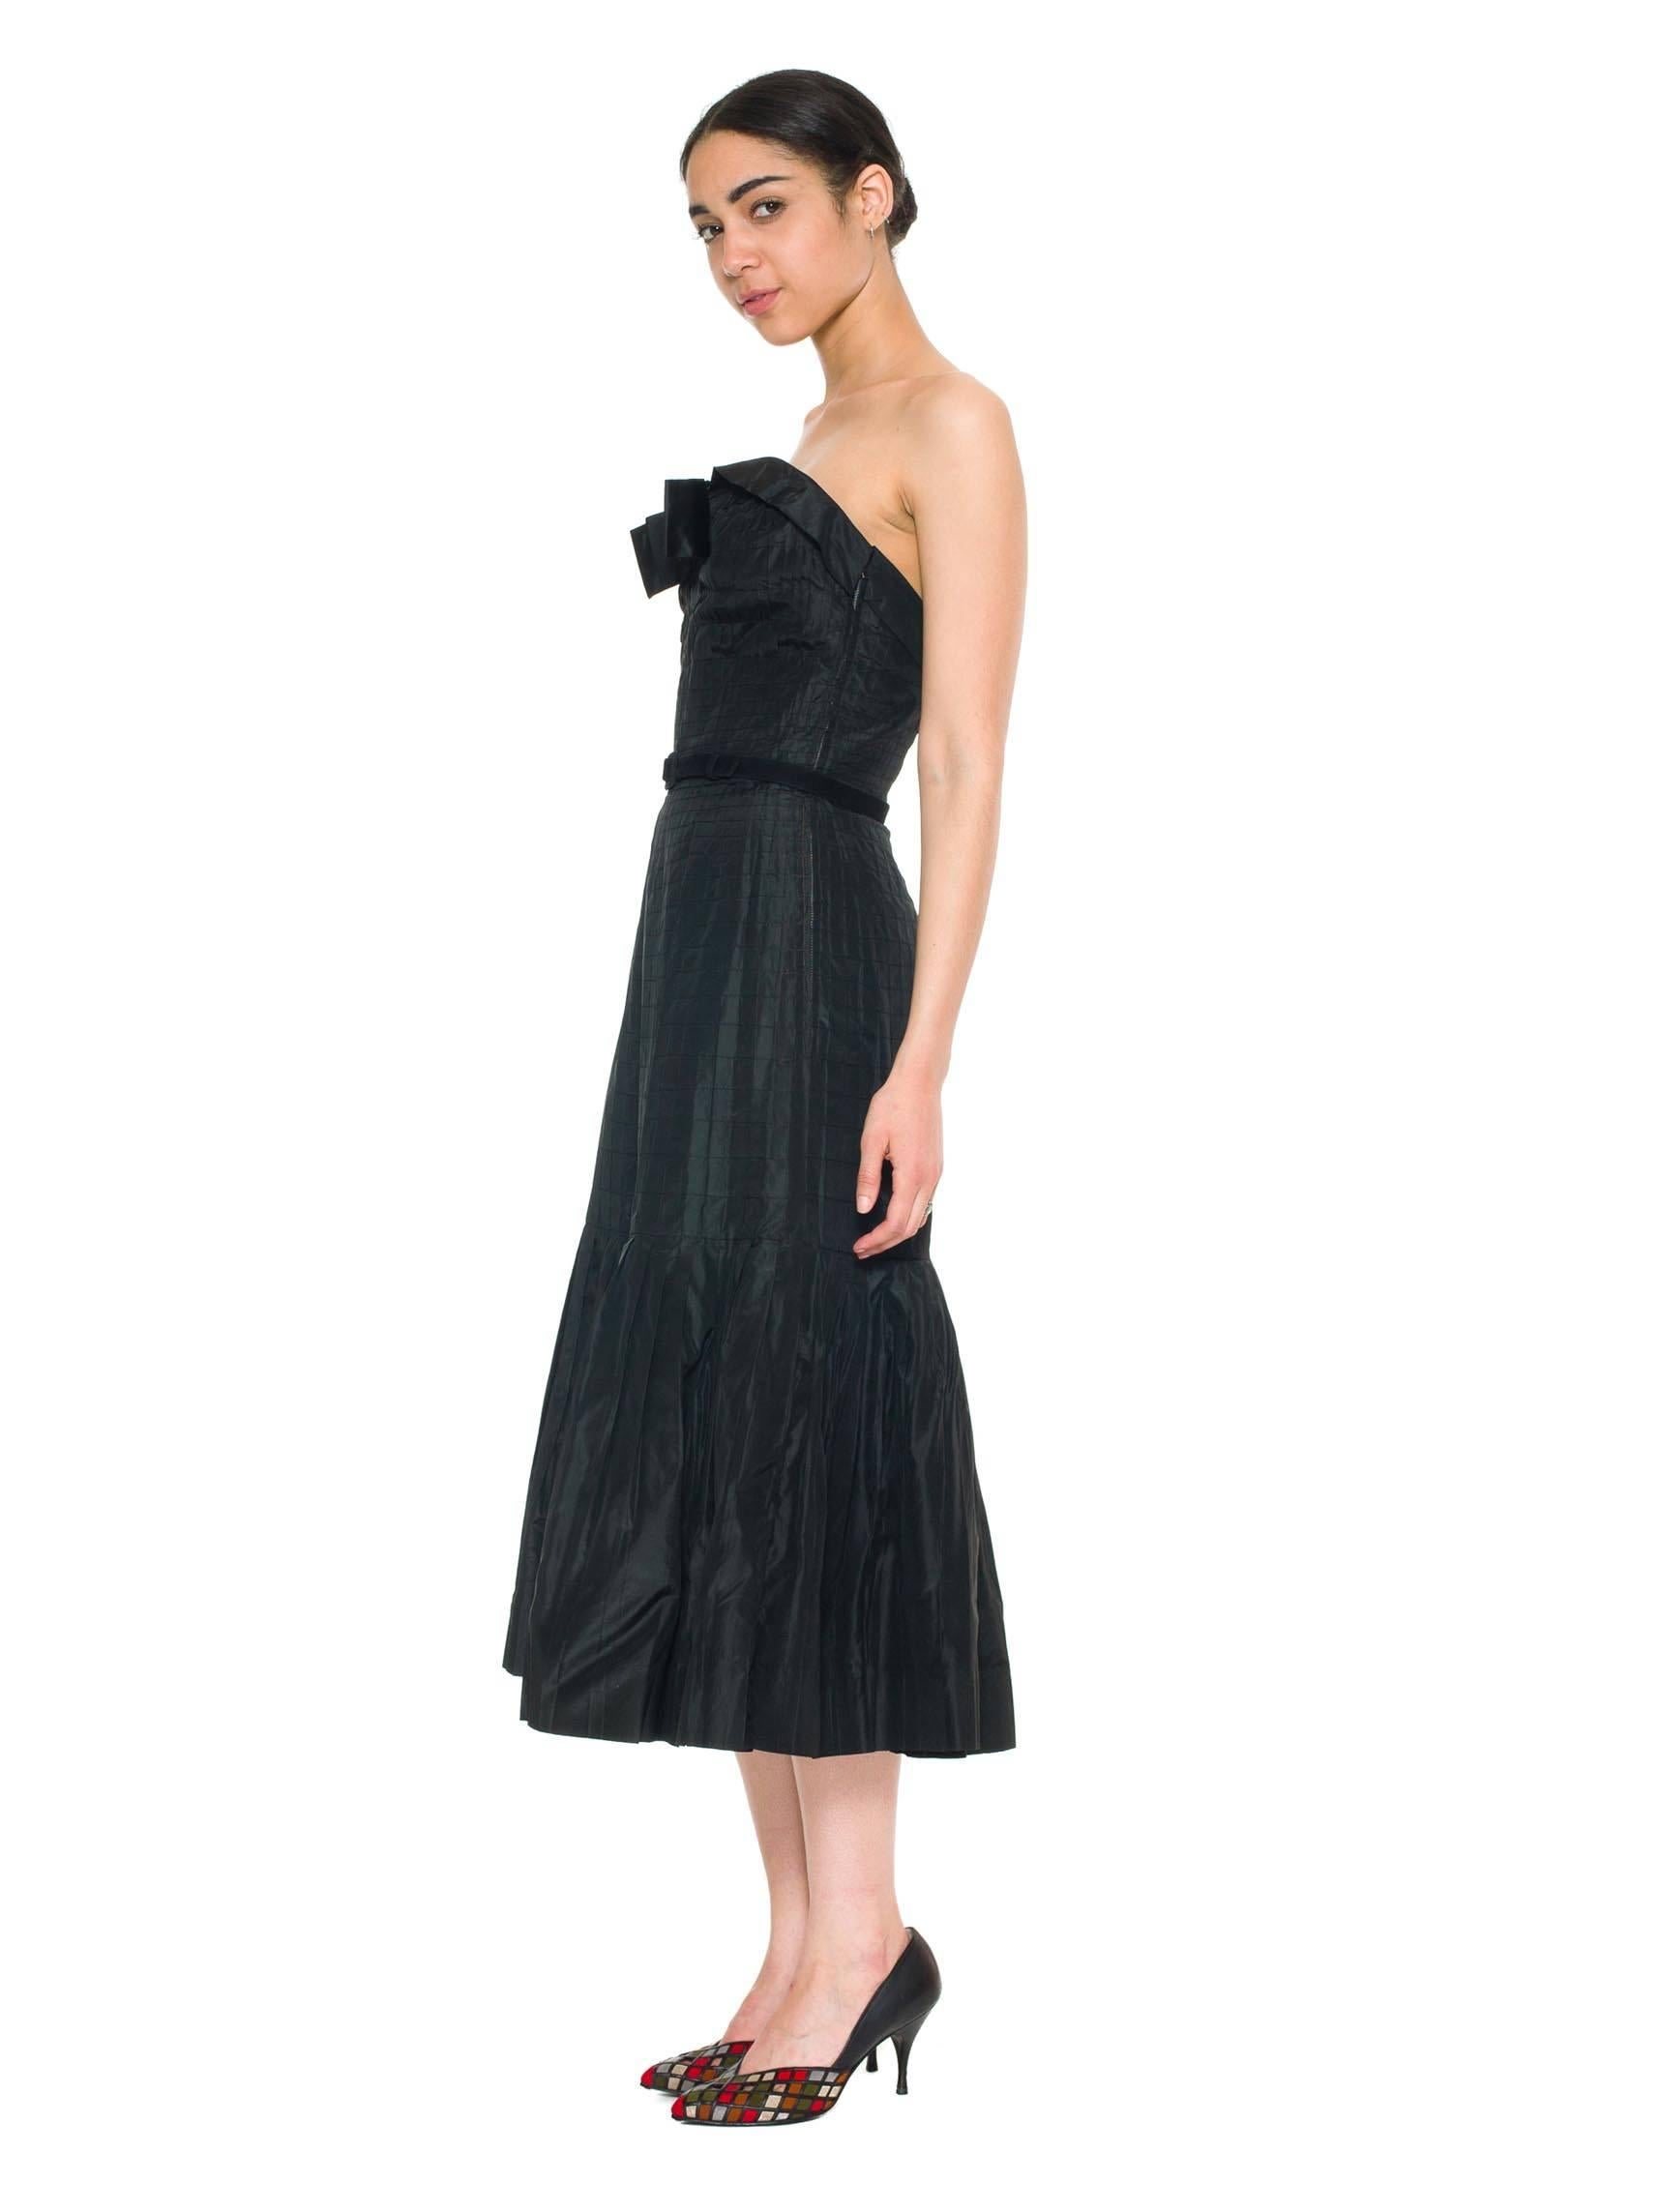 Women's 1950s Jacques Heim Actualité Taffeta Cocktail Dress